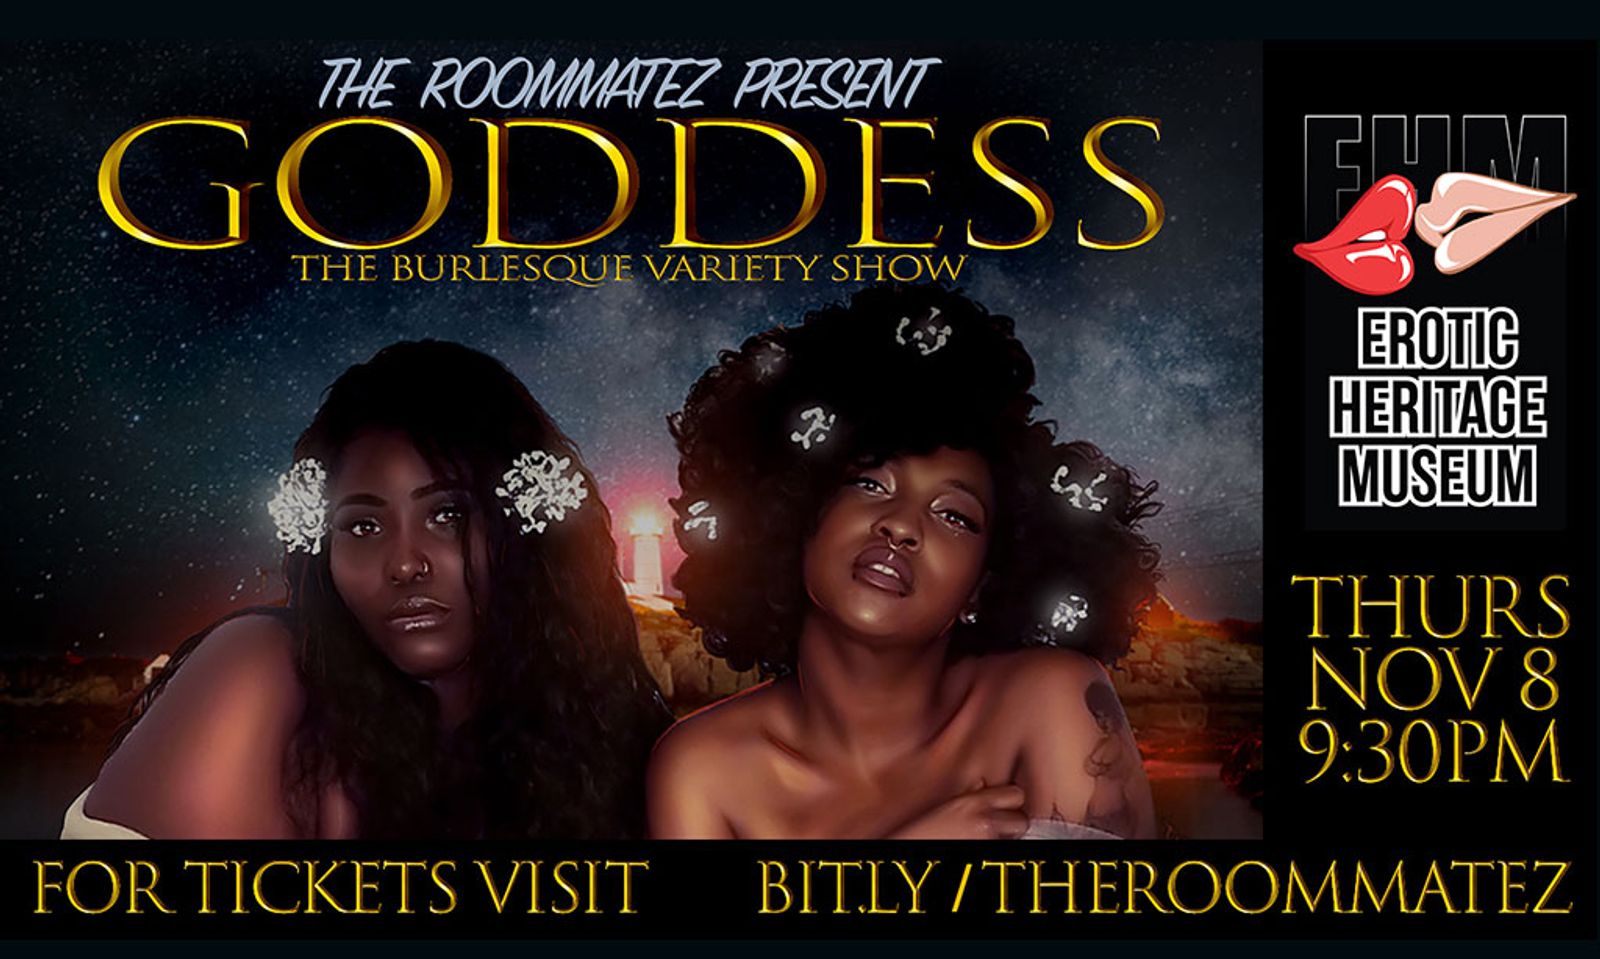 Erotic Heritage Museum To Hosts ‘Goddess’ Thursday, November 8